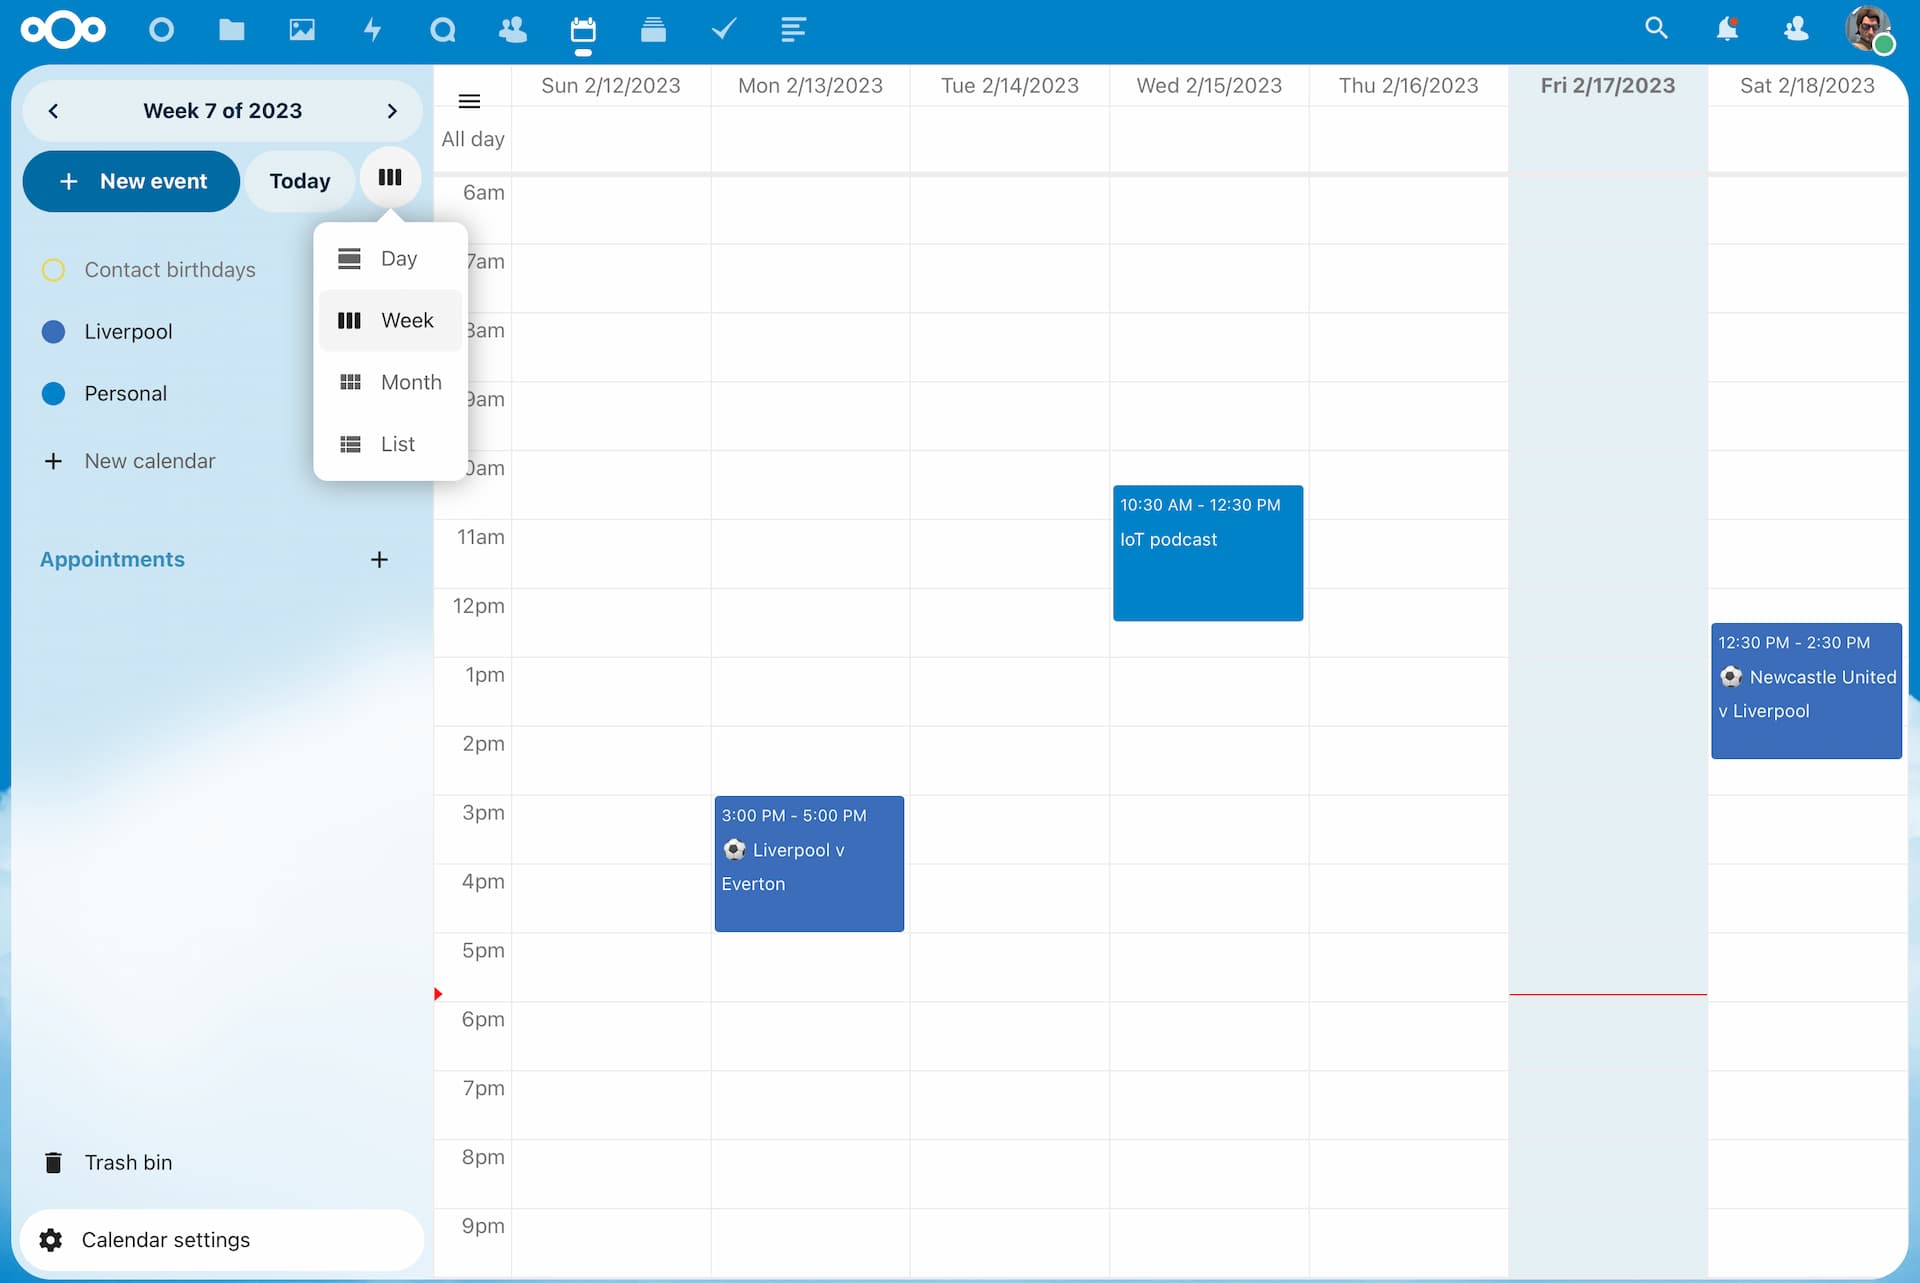 NextCloud calendar as a private alternative to Google services on Chromebooks